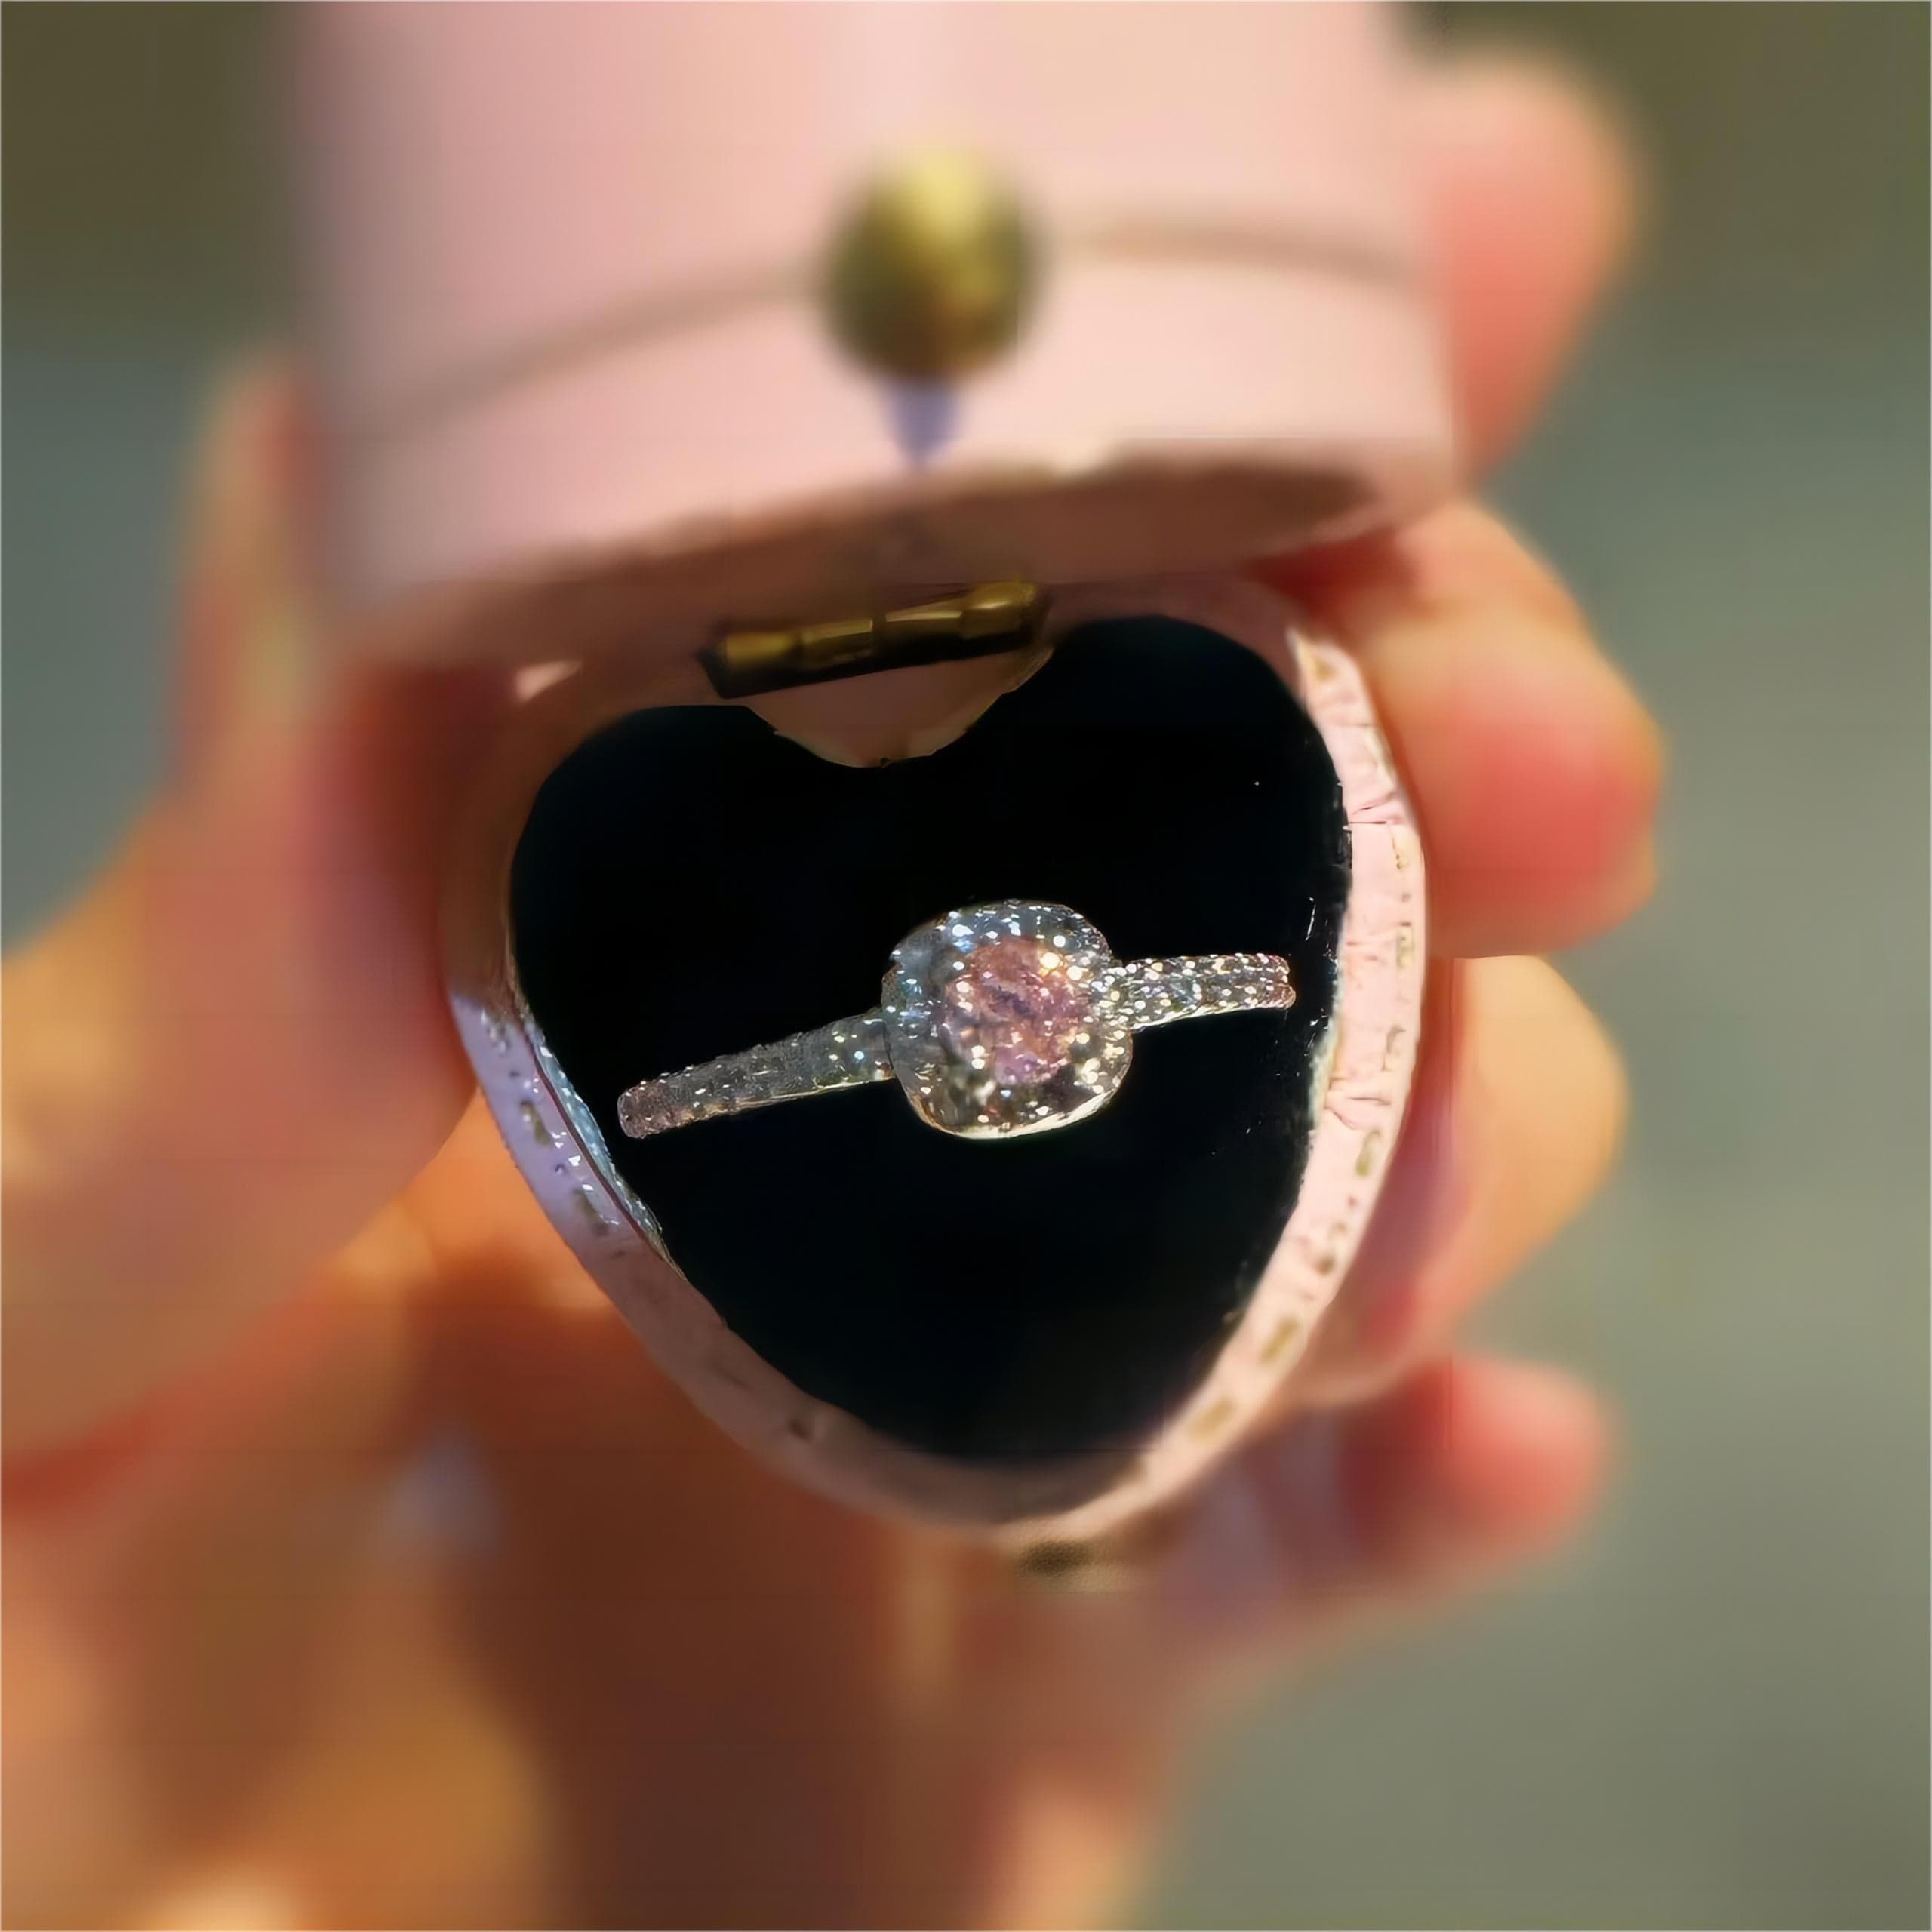 Chic CZ Inlaid Pink Rhinestone Crystal Ring